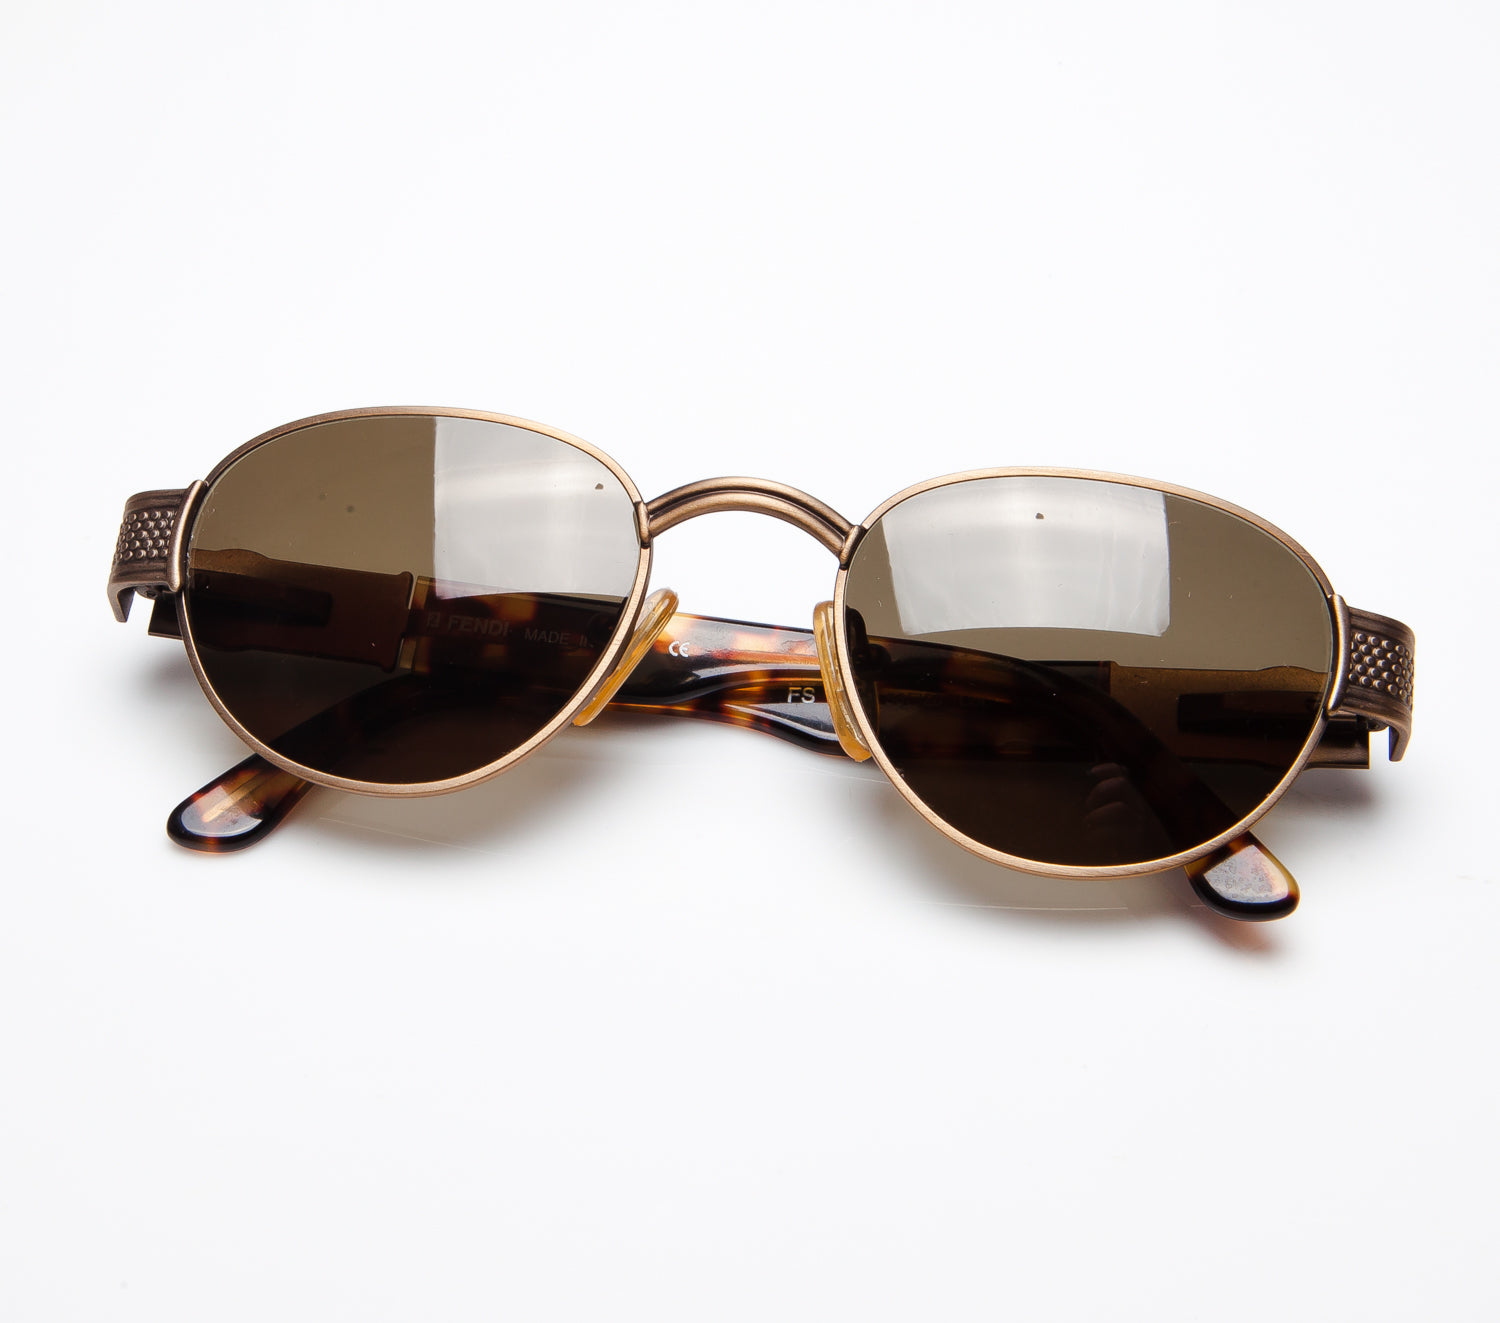 Fendi Men's Sky Round-Frame Sunglasses